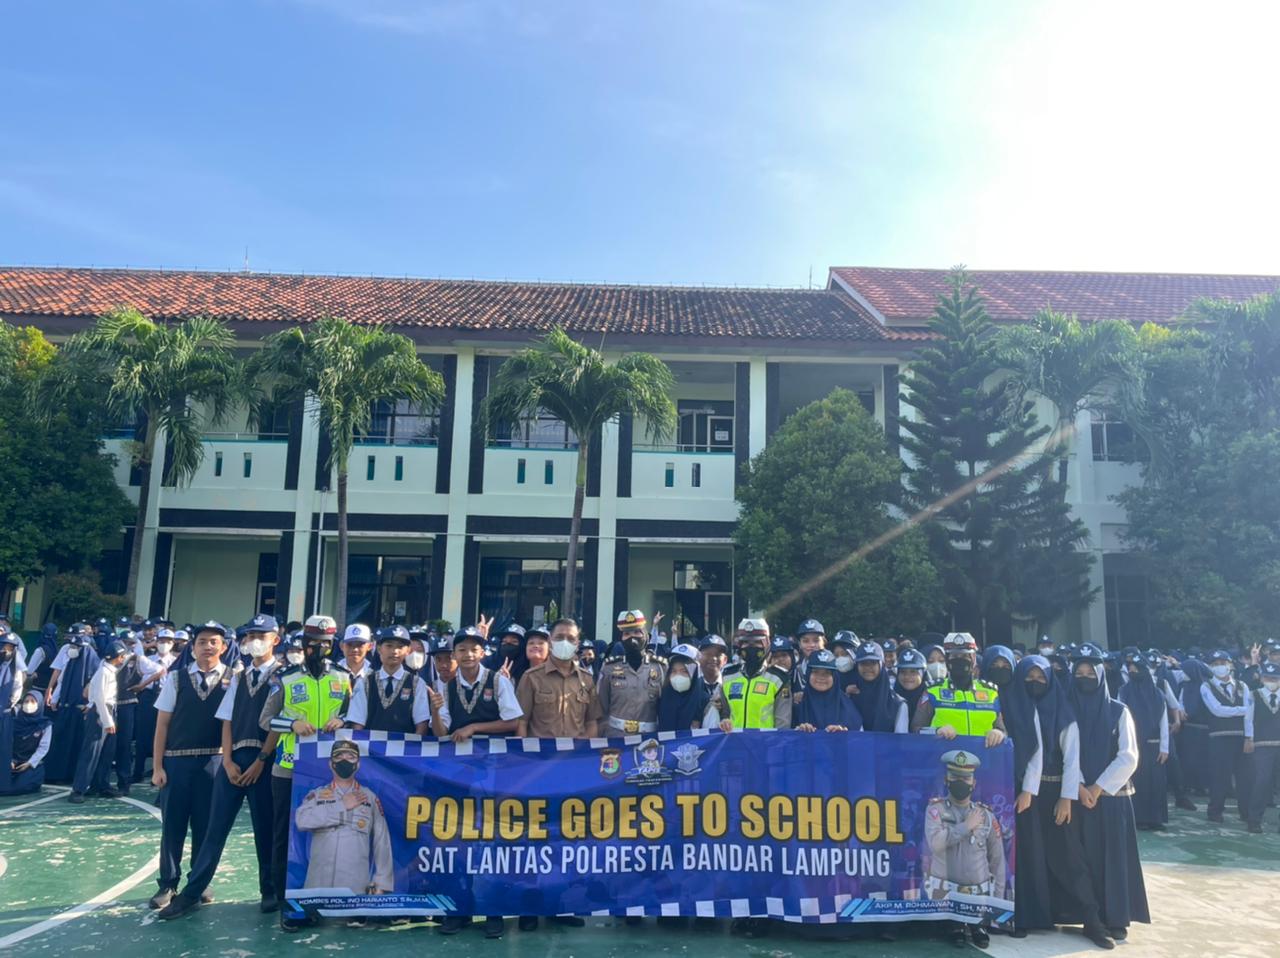 Satlantas Polresta Bandarlampung Laksanakan Police Goes to School